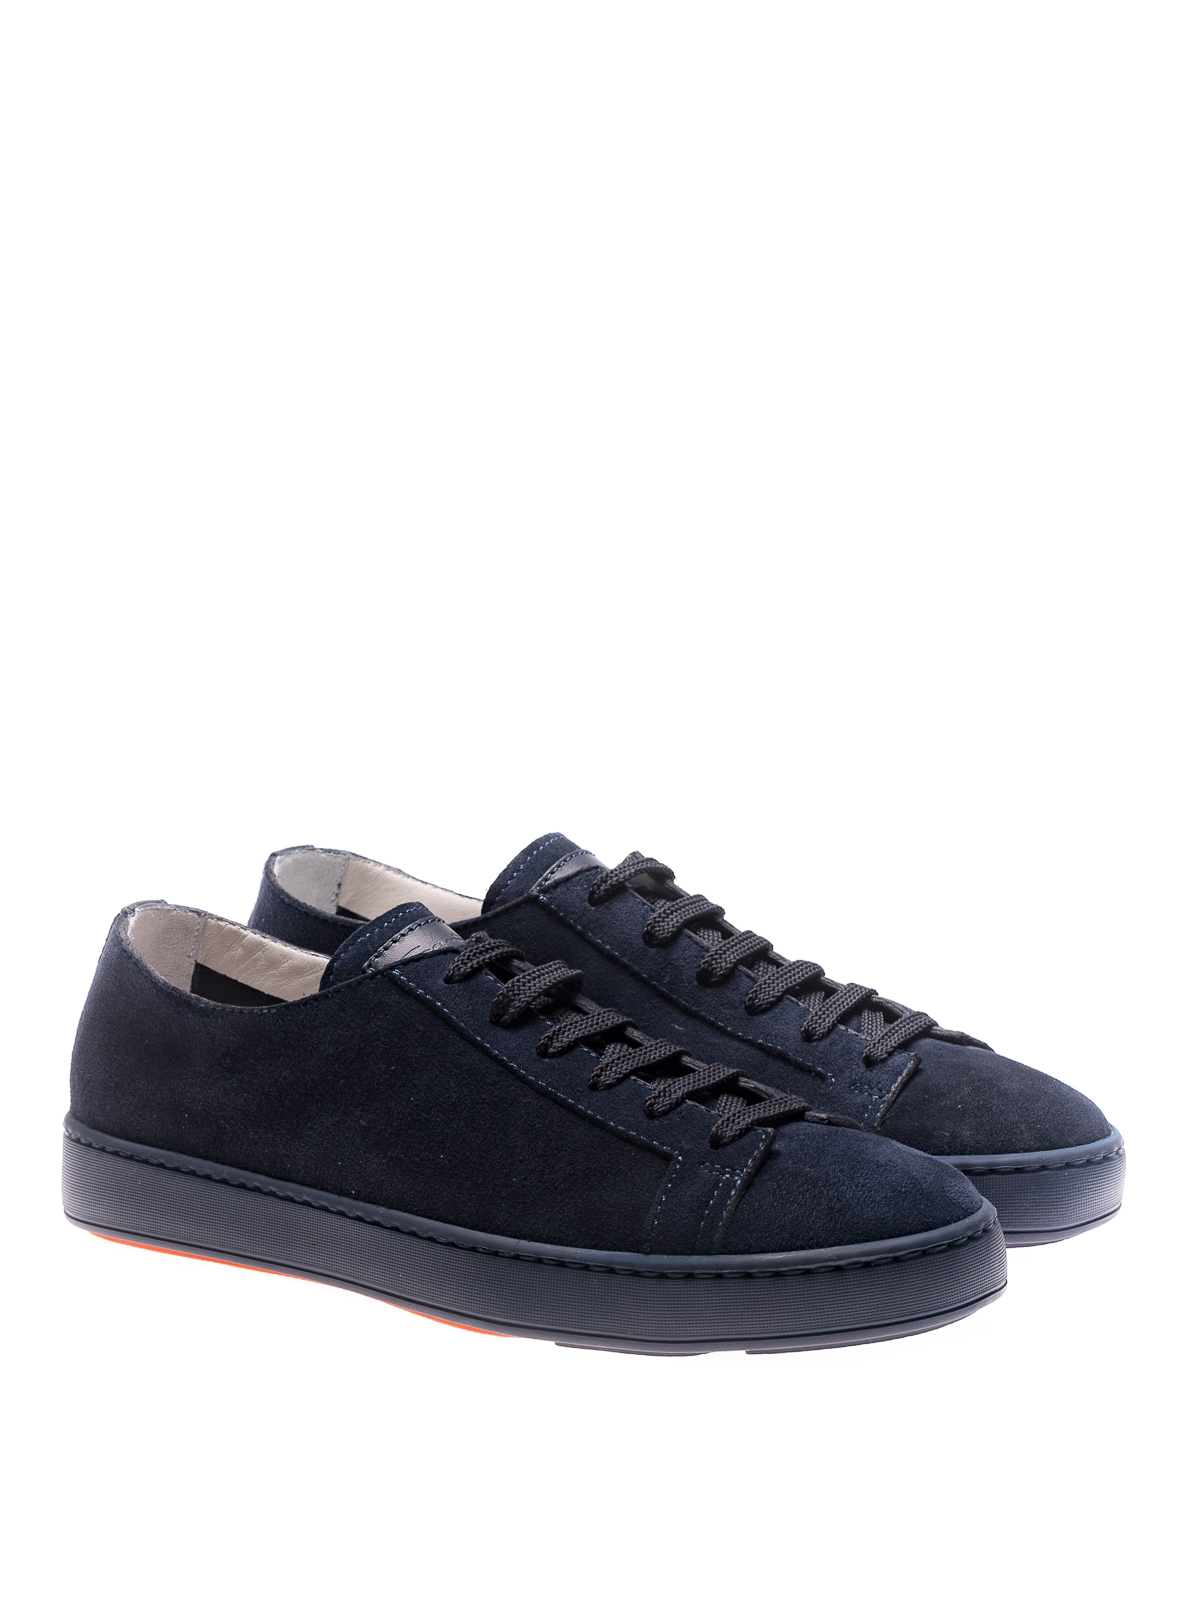 Trainers Santoni - Blue suede lace-up sneakers - MBCN14387UA6CDDUU55